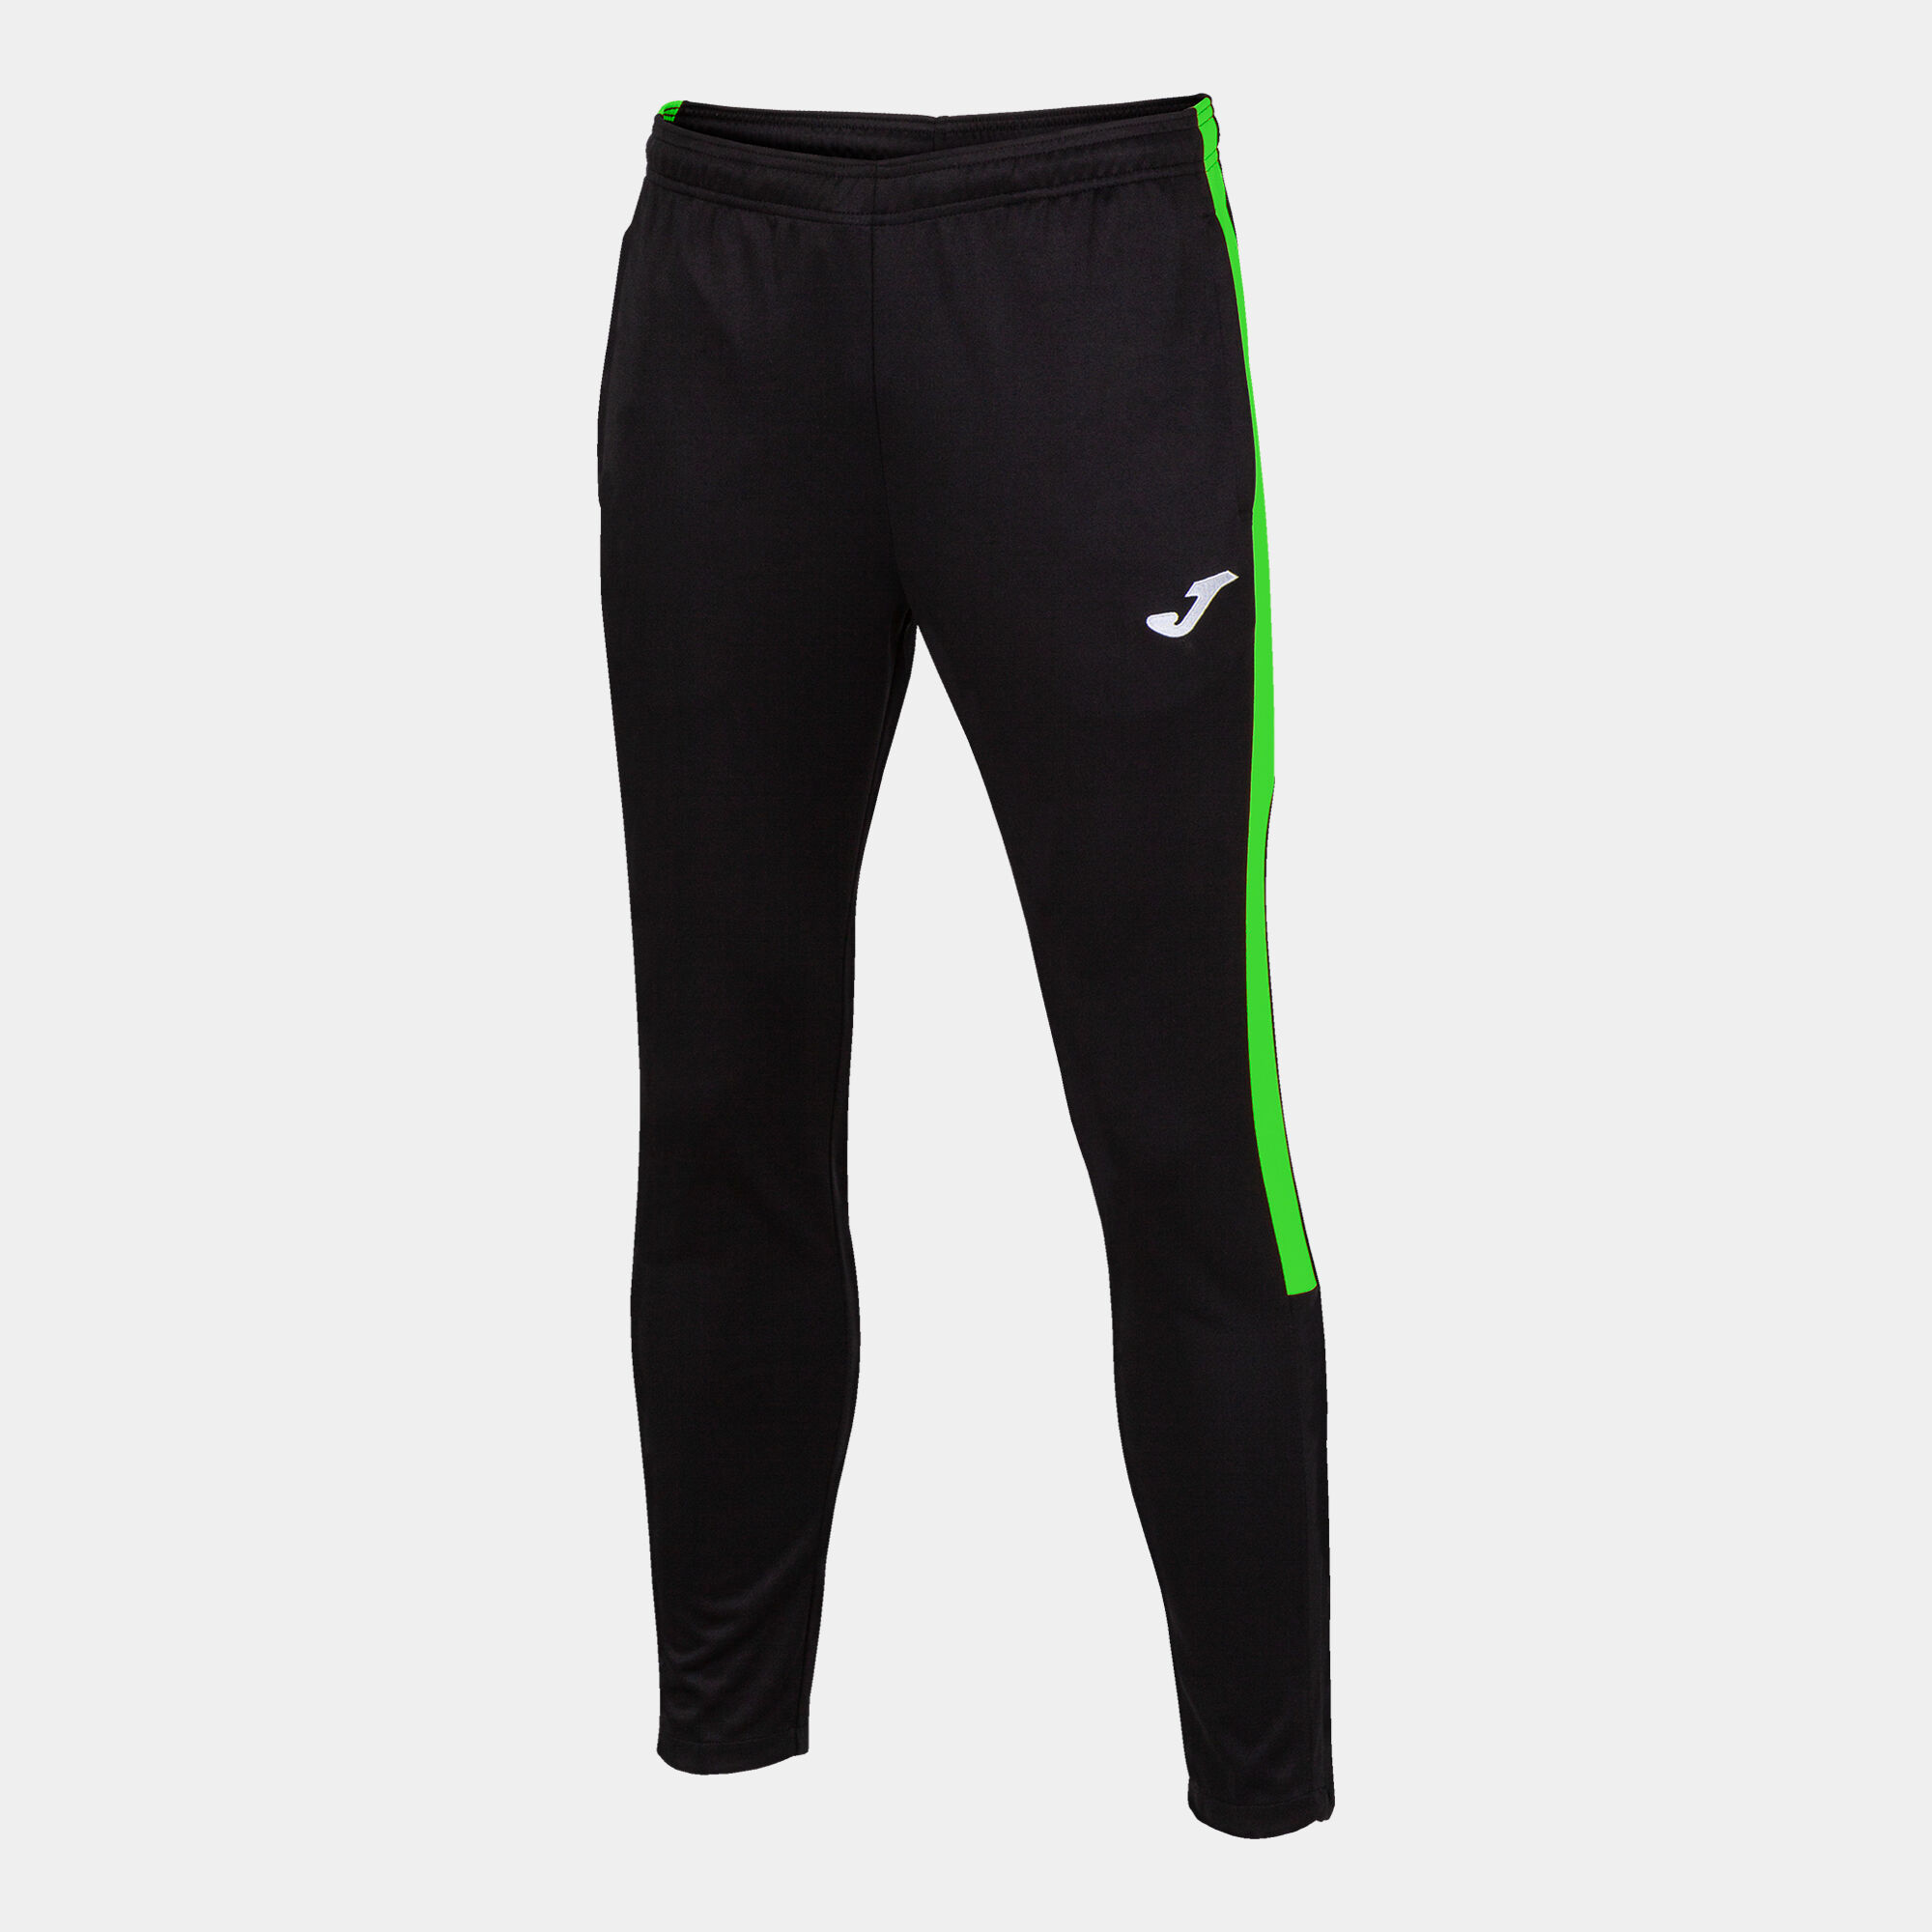 Longs pants man Eco Championship black fluorescent green